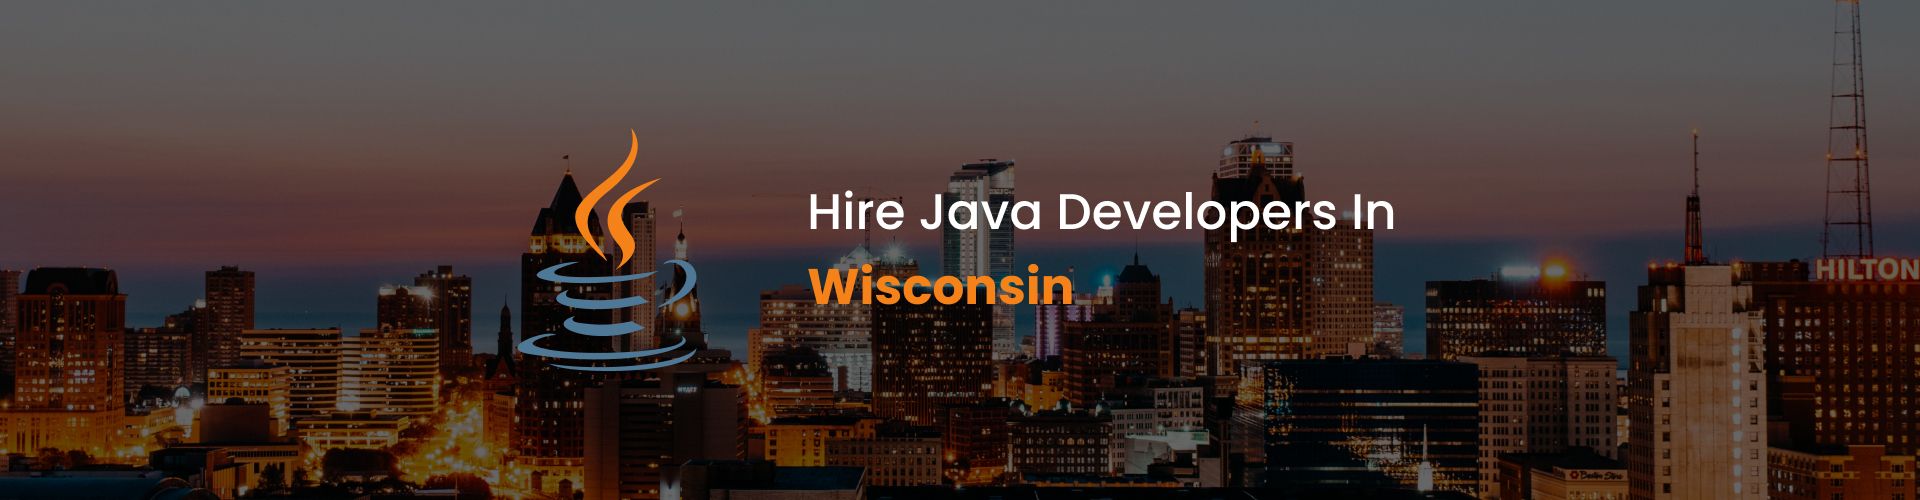 hire java developers in wisconsin